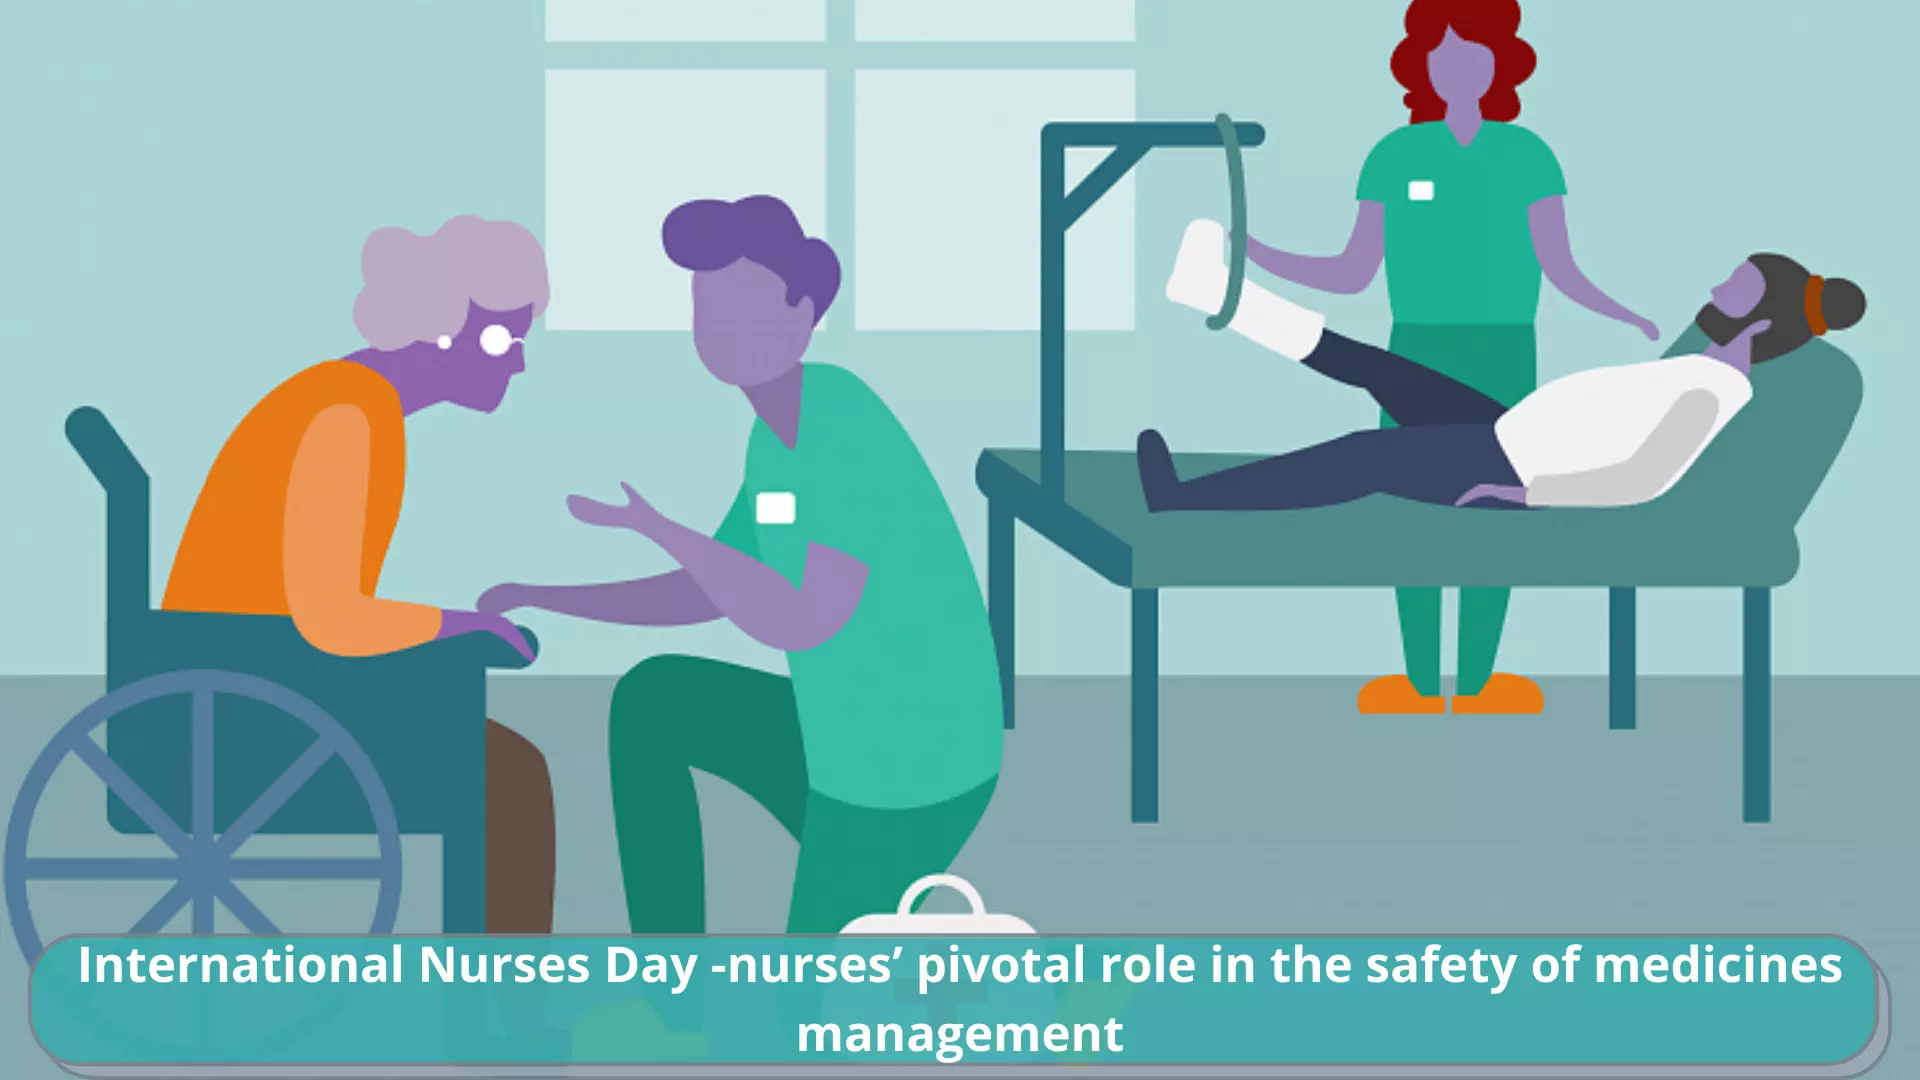 International Nurses Day observed on May 12